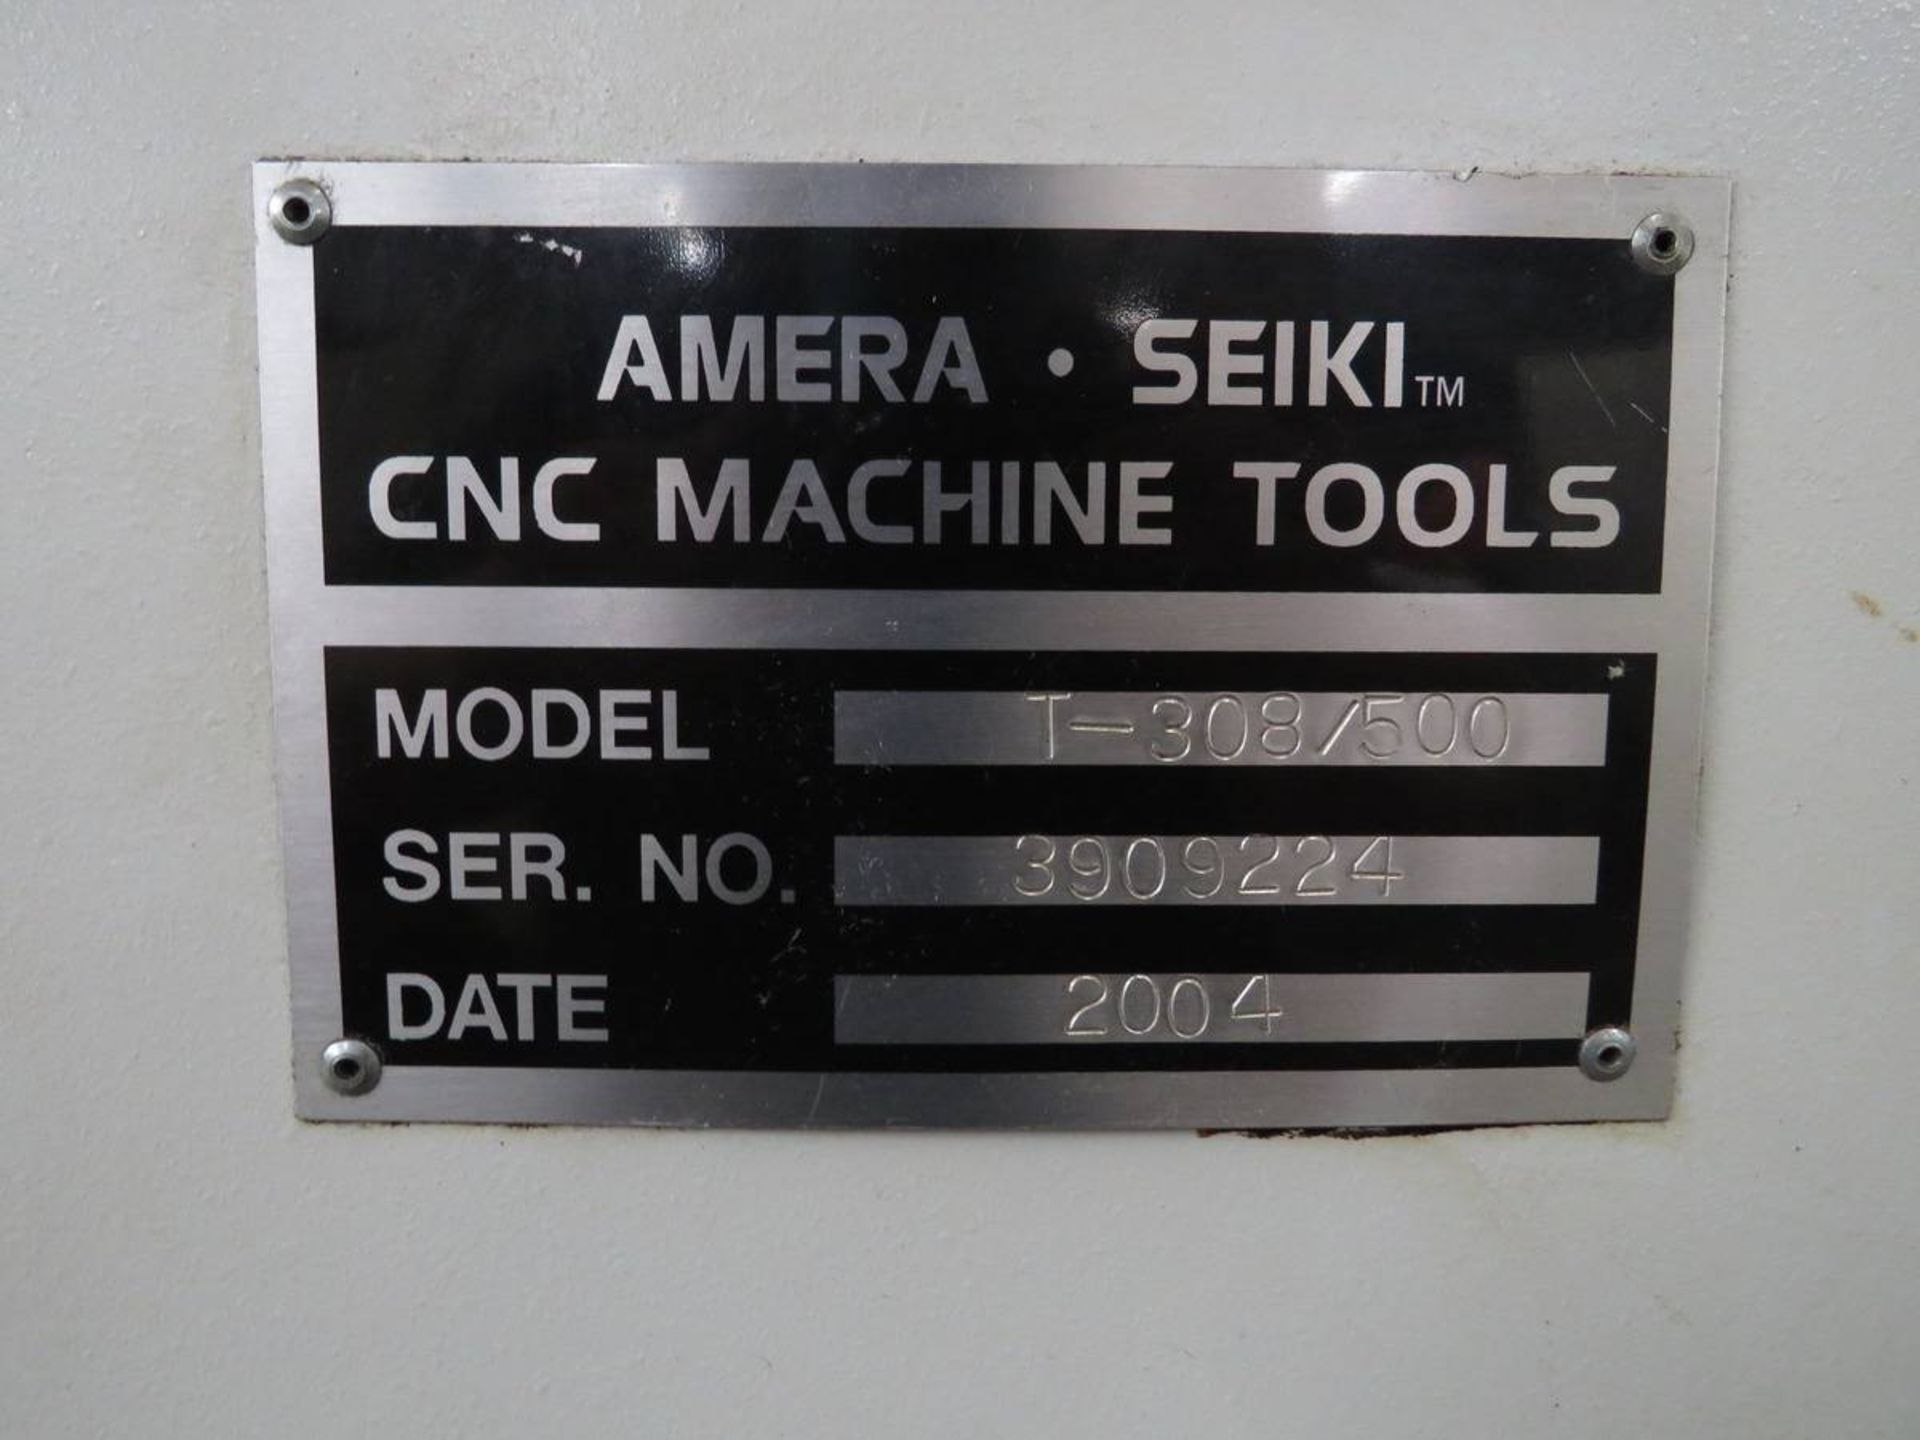 2004 Amera Seiki T-308/500 2 Axis CNC Turning Center - Image 12 of 12